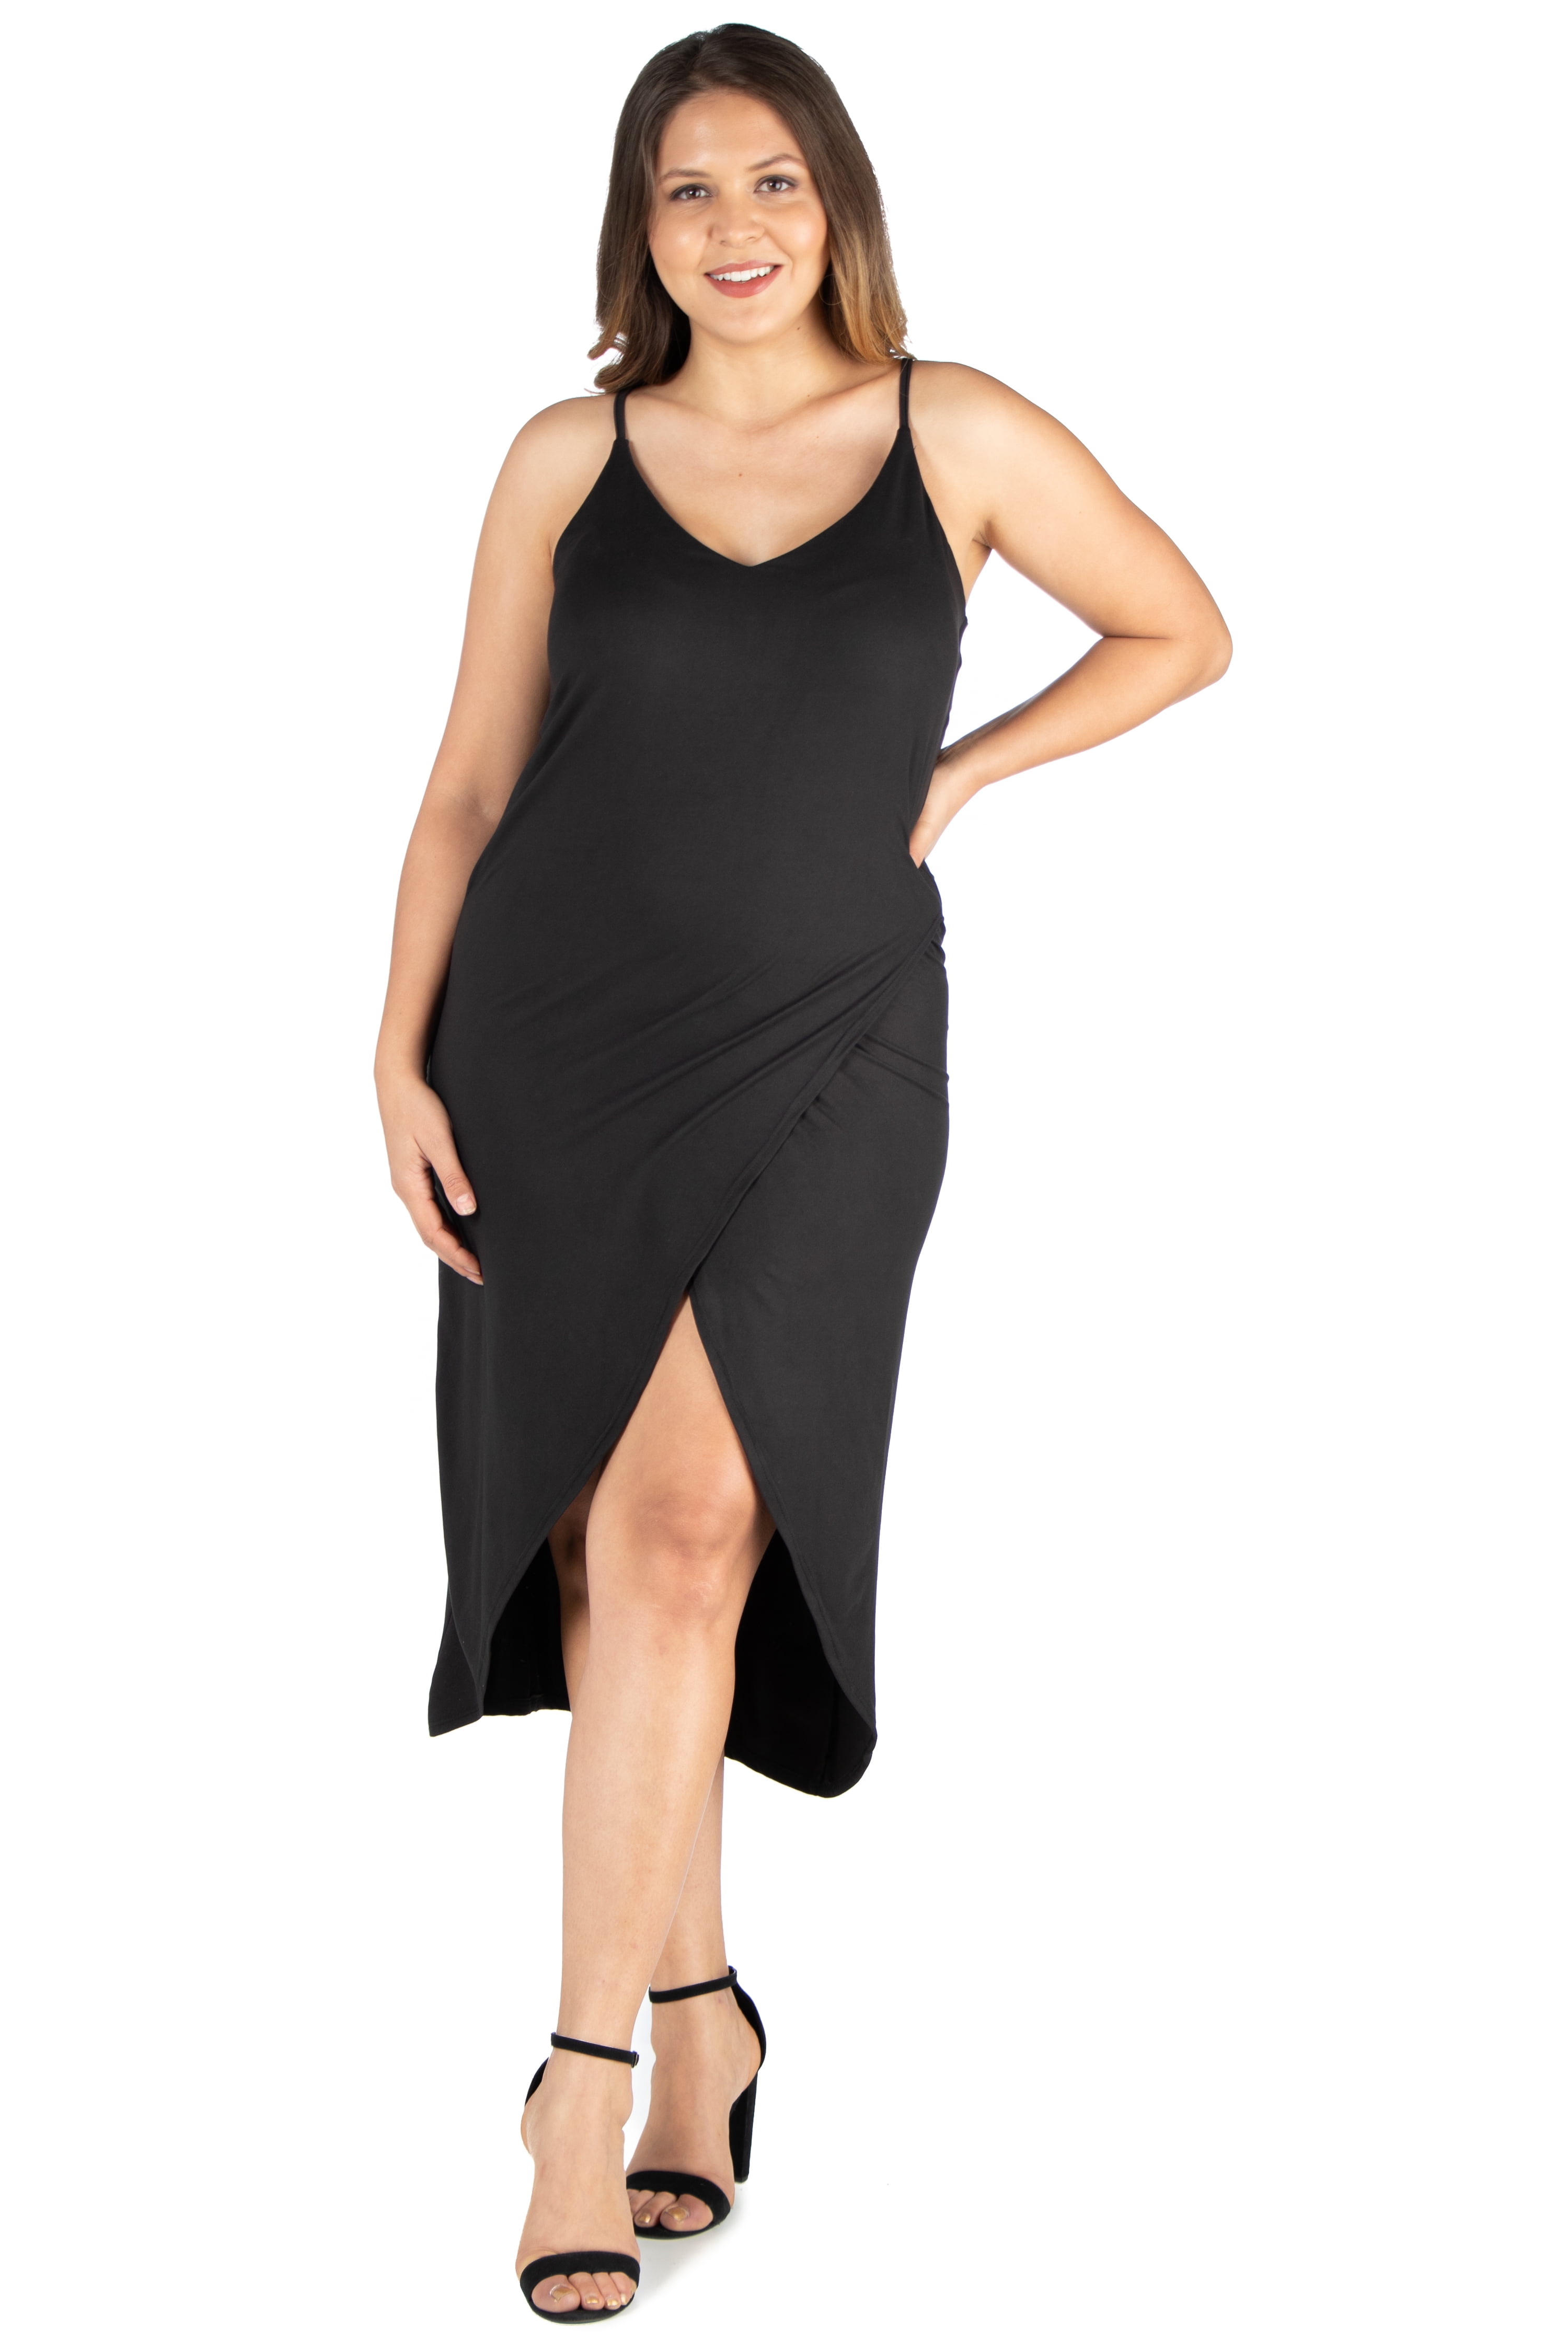 Womens Plus Size Adjustable Spaghetti Straps Stretch Slip Midi A-line Dress